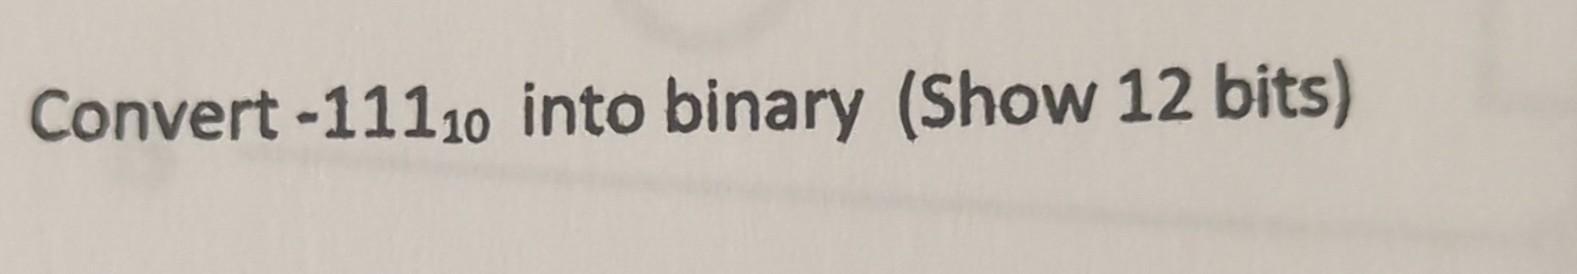 Convert -11110 into binary (Show 12 bits)